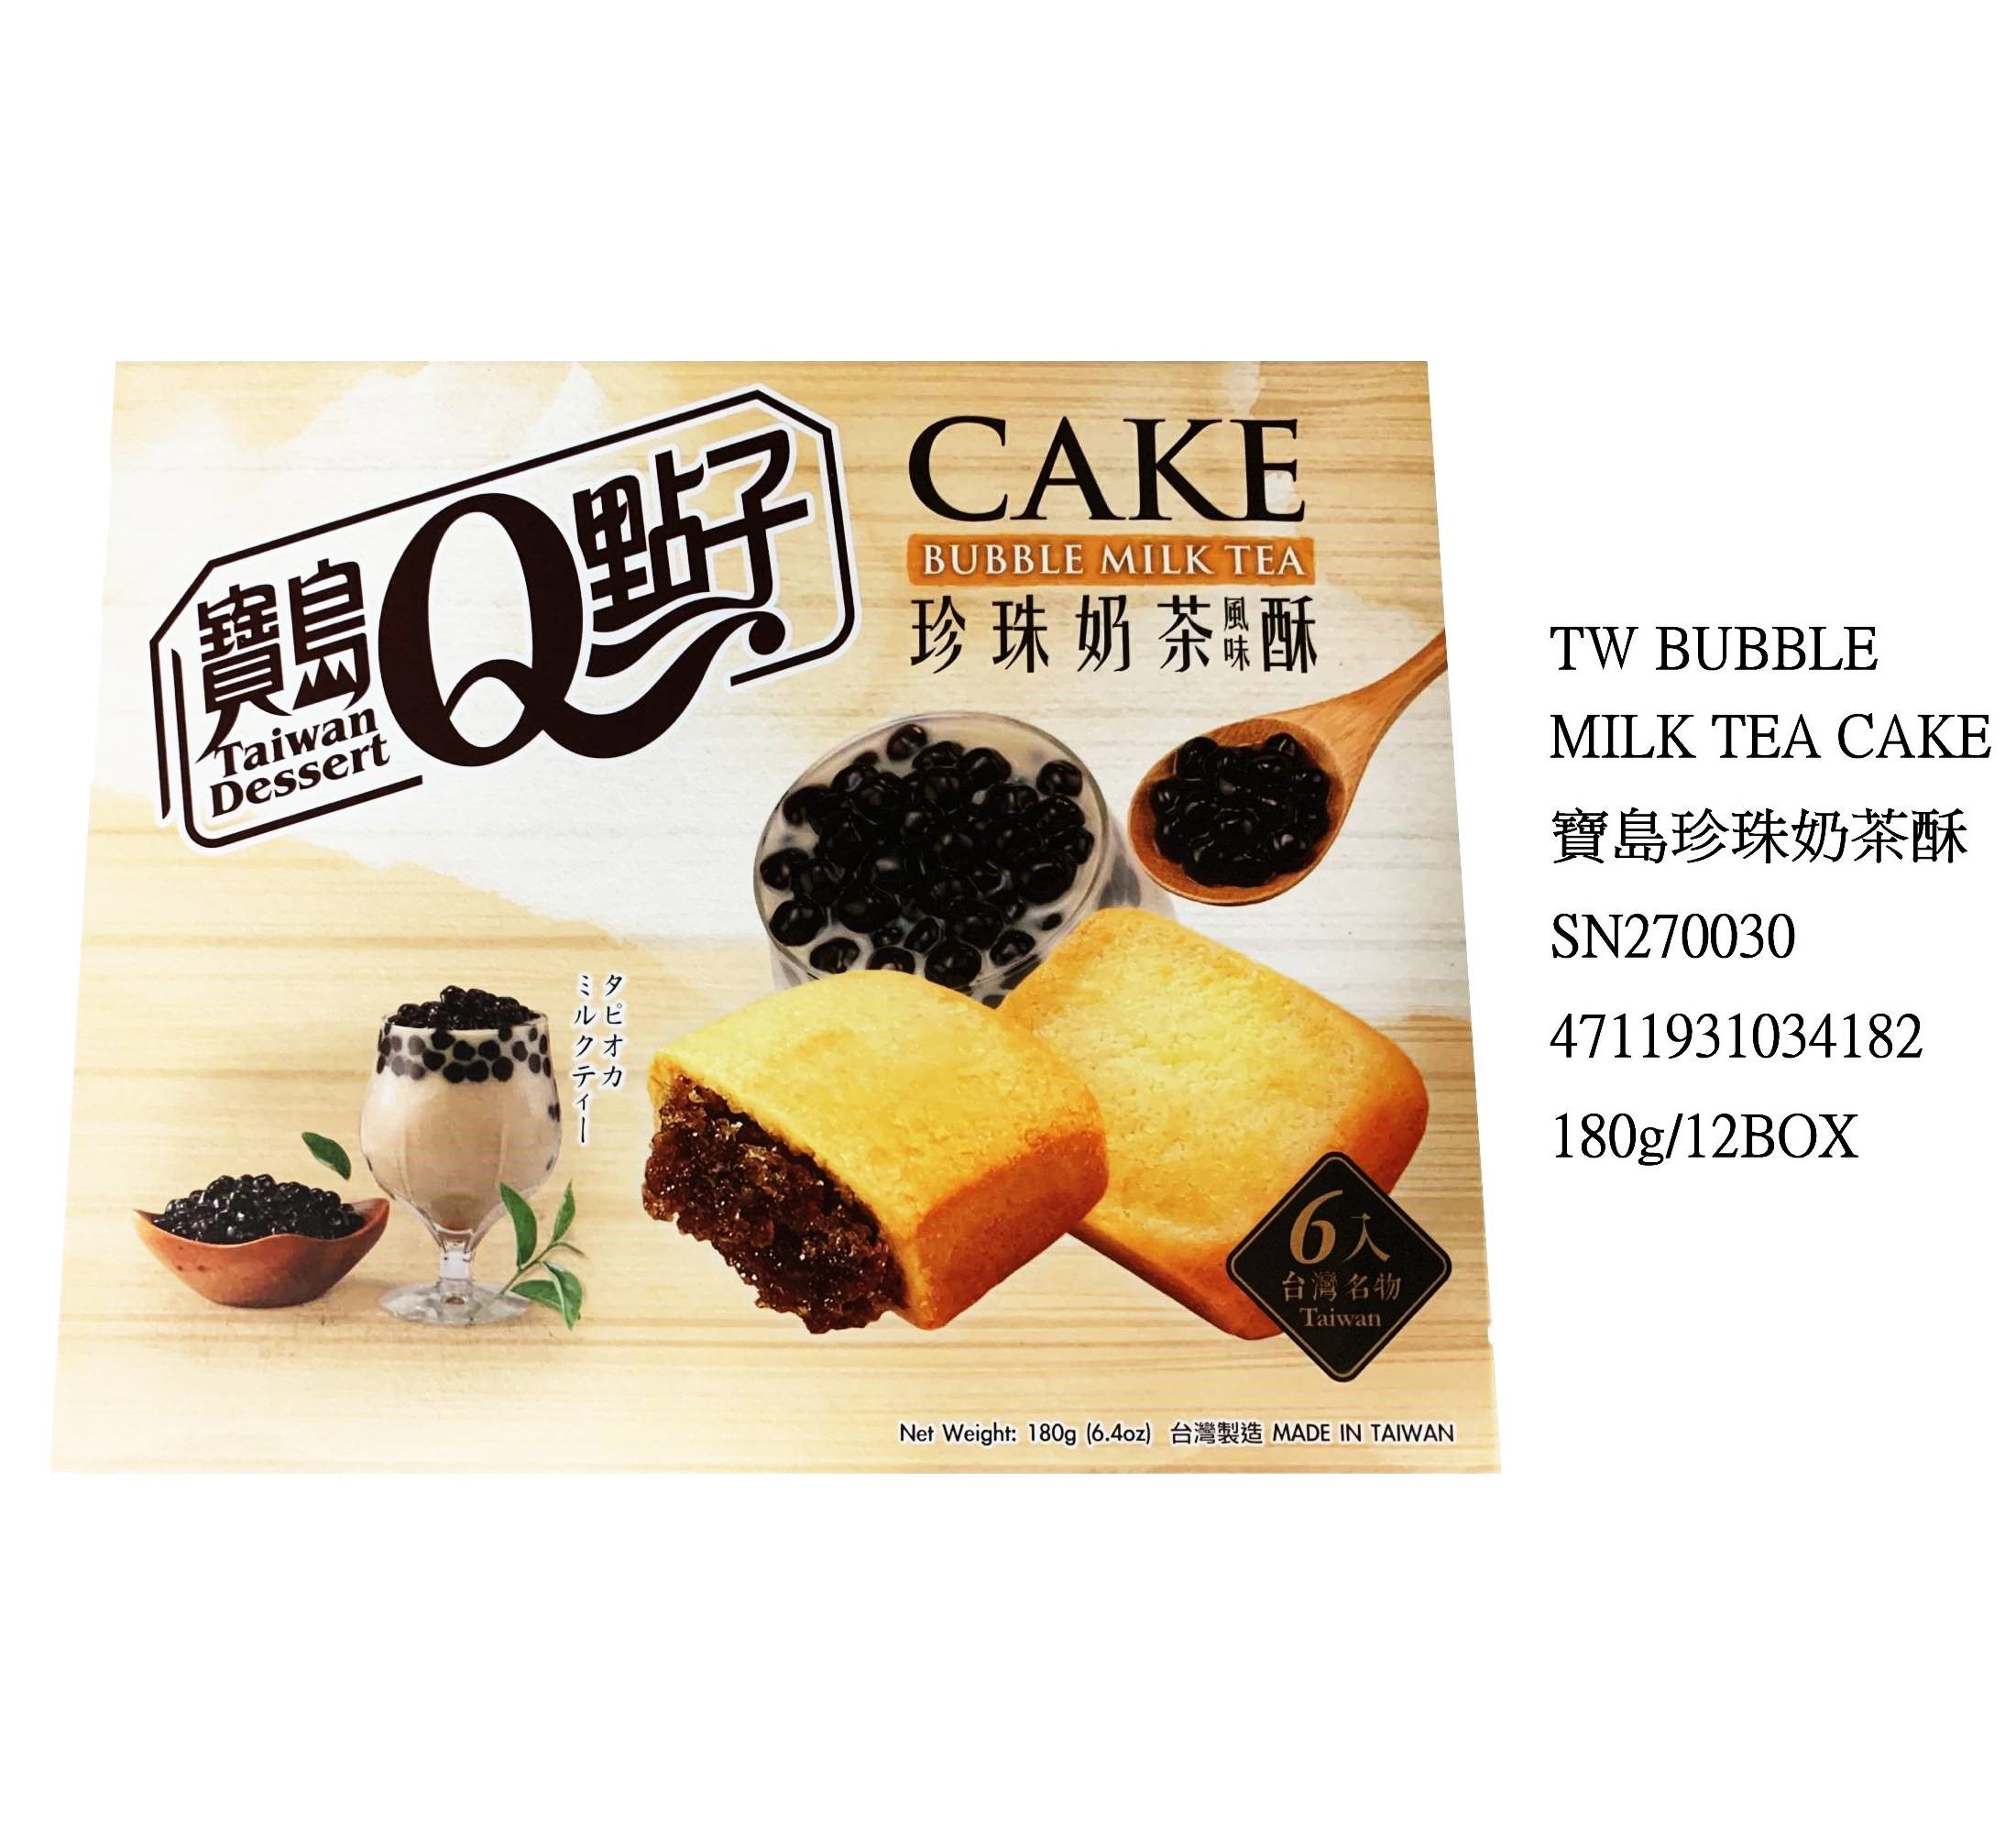 TAIWAN DESSERT BUBBLE MILK TEA CAKE SN270030